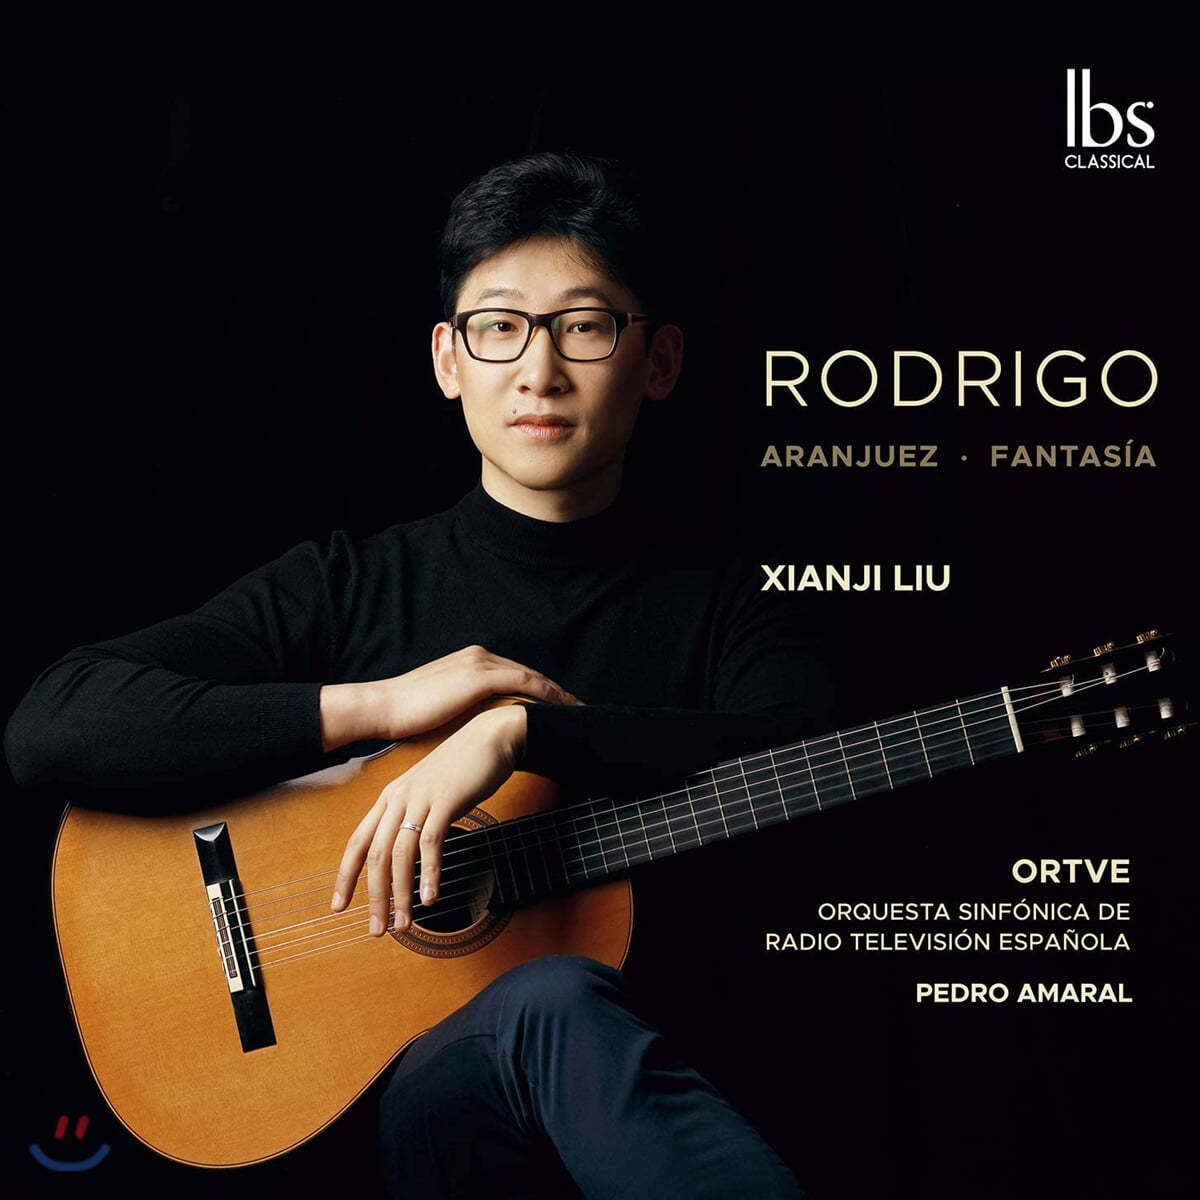 Xianji Liu 로드리고: 아란후에스 협주곡, 한 귀인을 위한 환상곡 (Joaquin Rodrigo: Aranjuez, Fantasia)